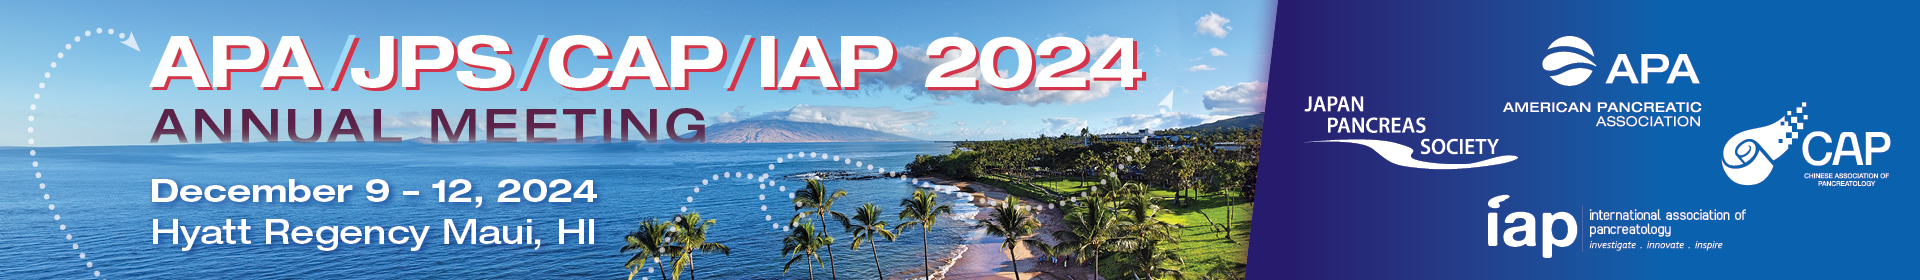 APA 2024 Annual Meeting Event Banner